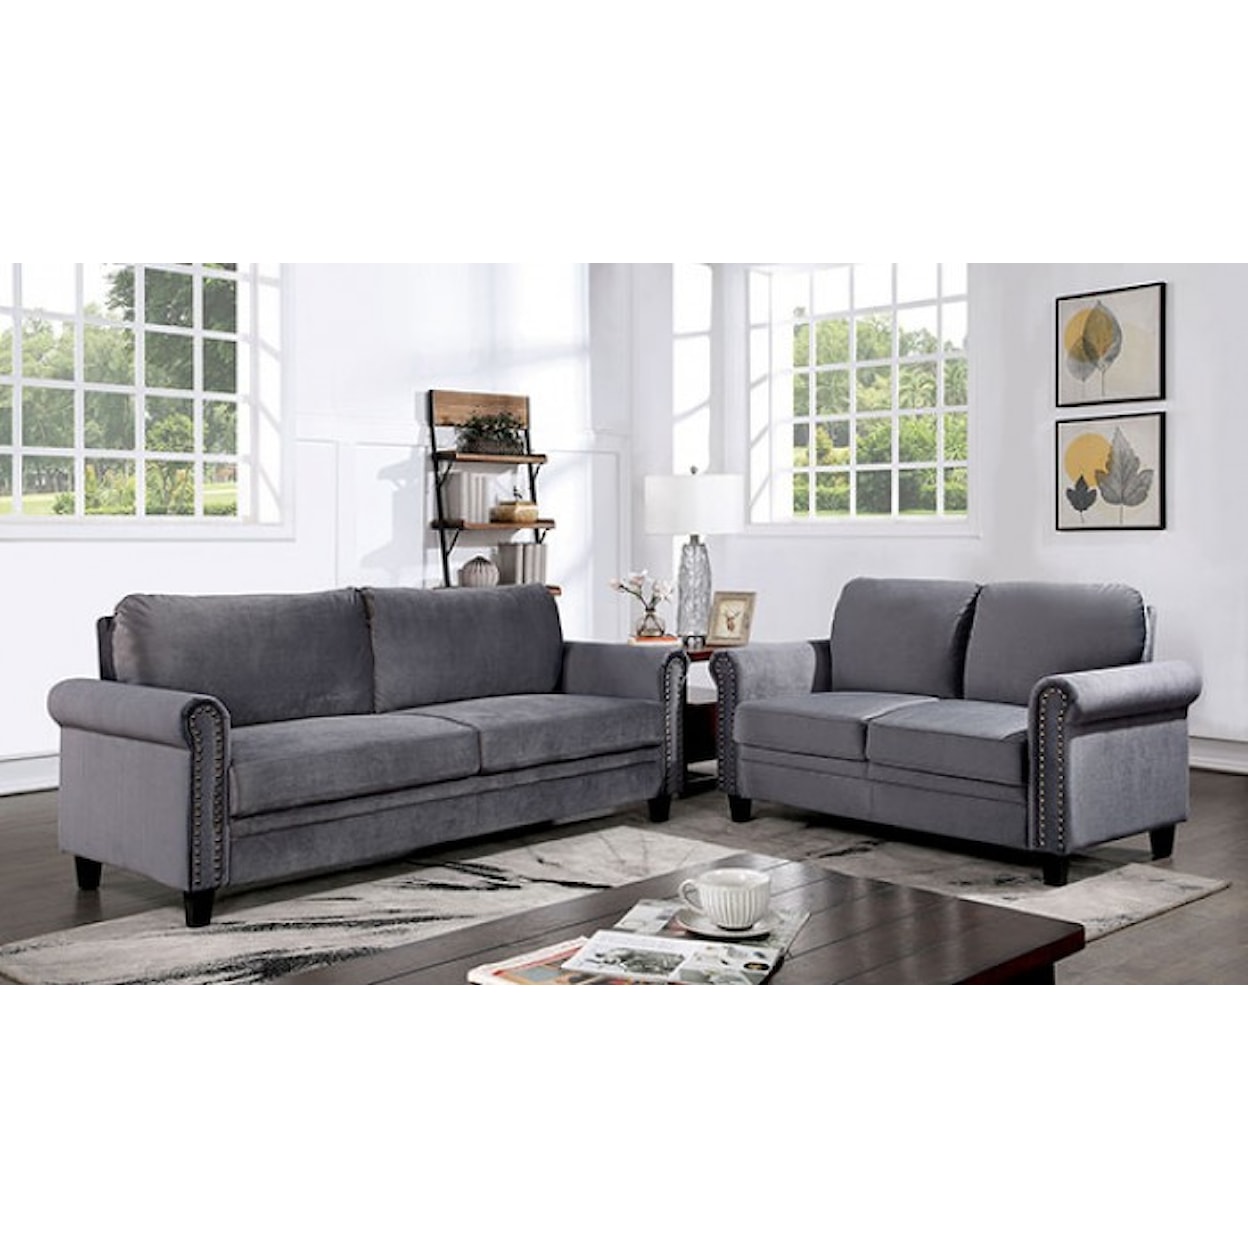 Furniture of America Noranda Sofa